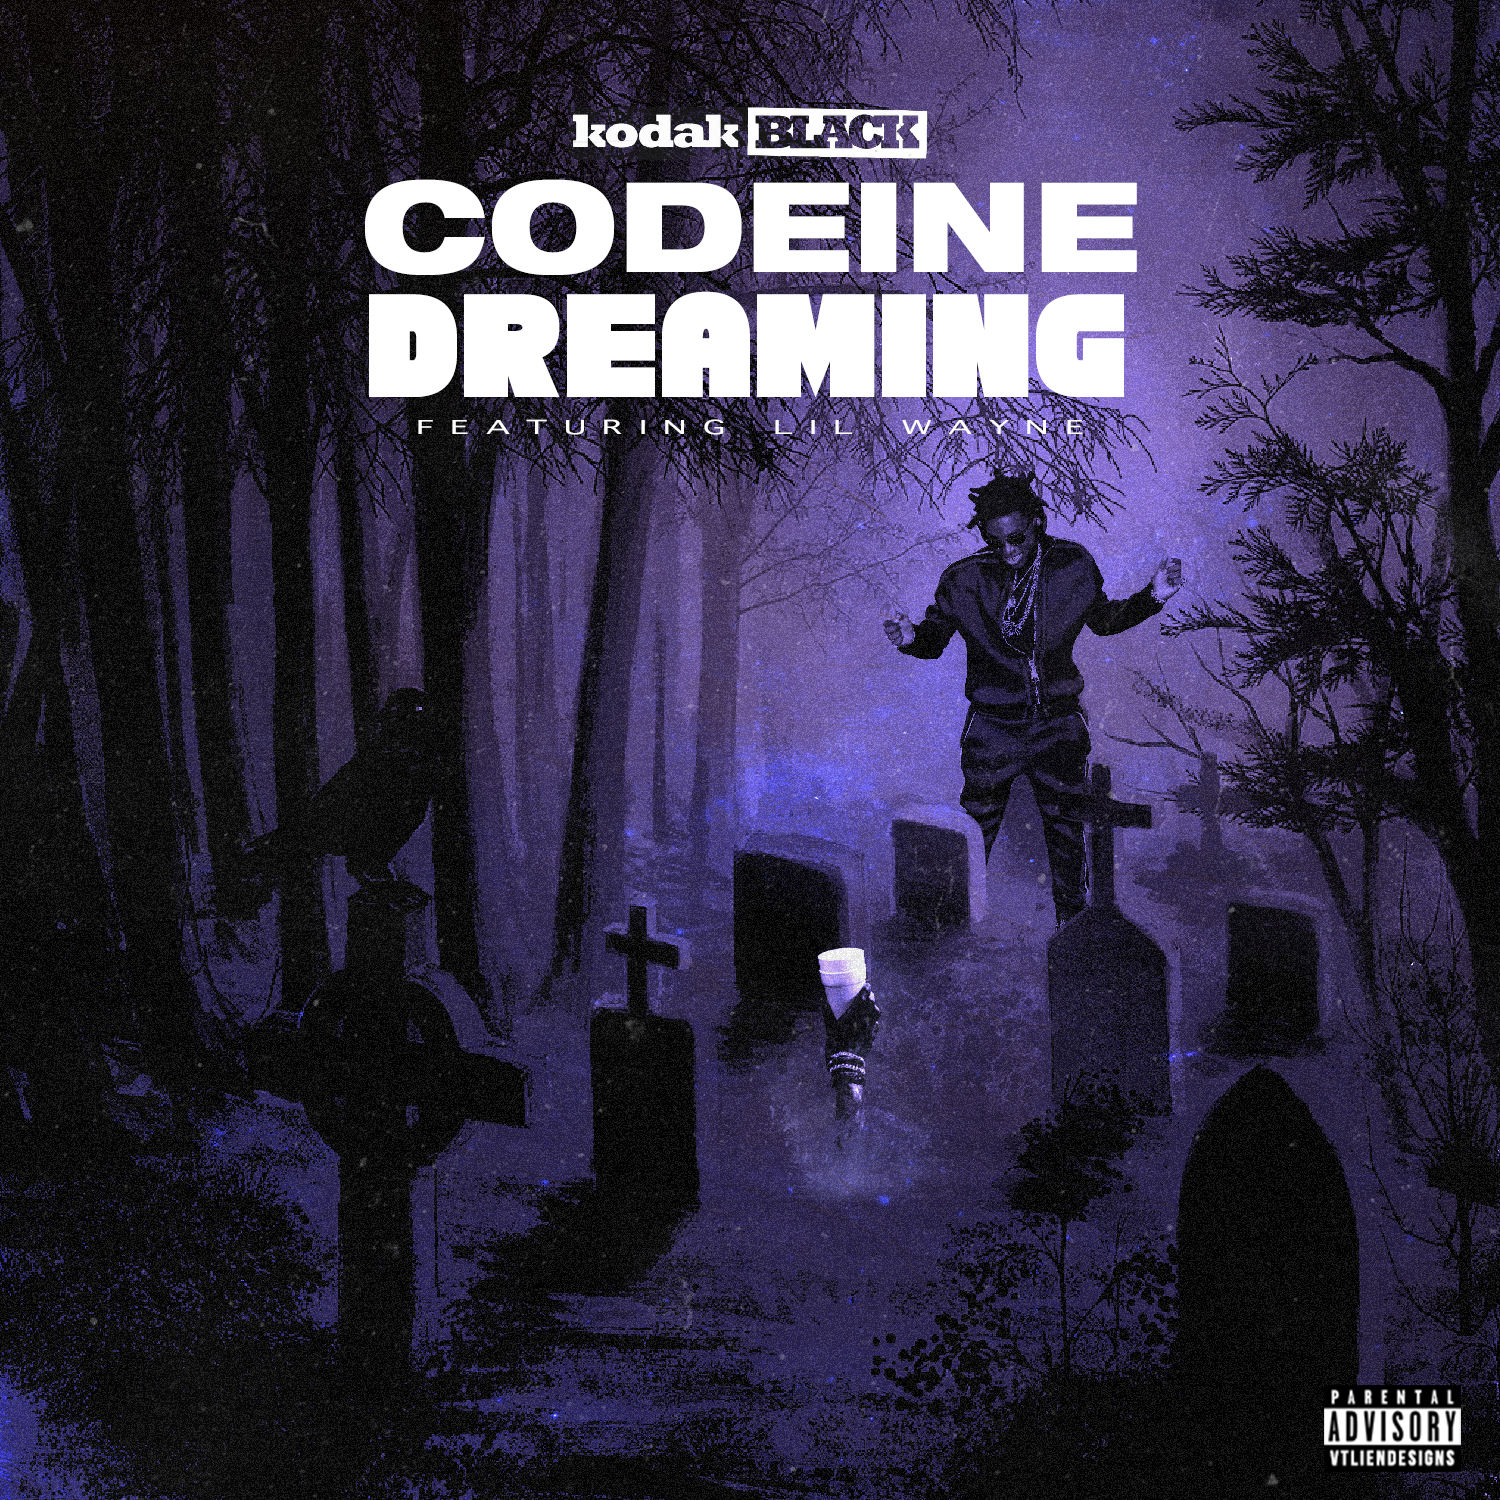 Kodak Black Codeine Dreaming Feat Lil Wayne - HD Wallpaper 